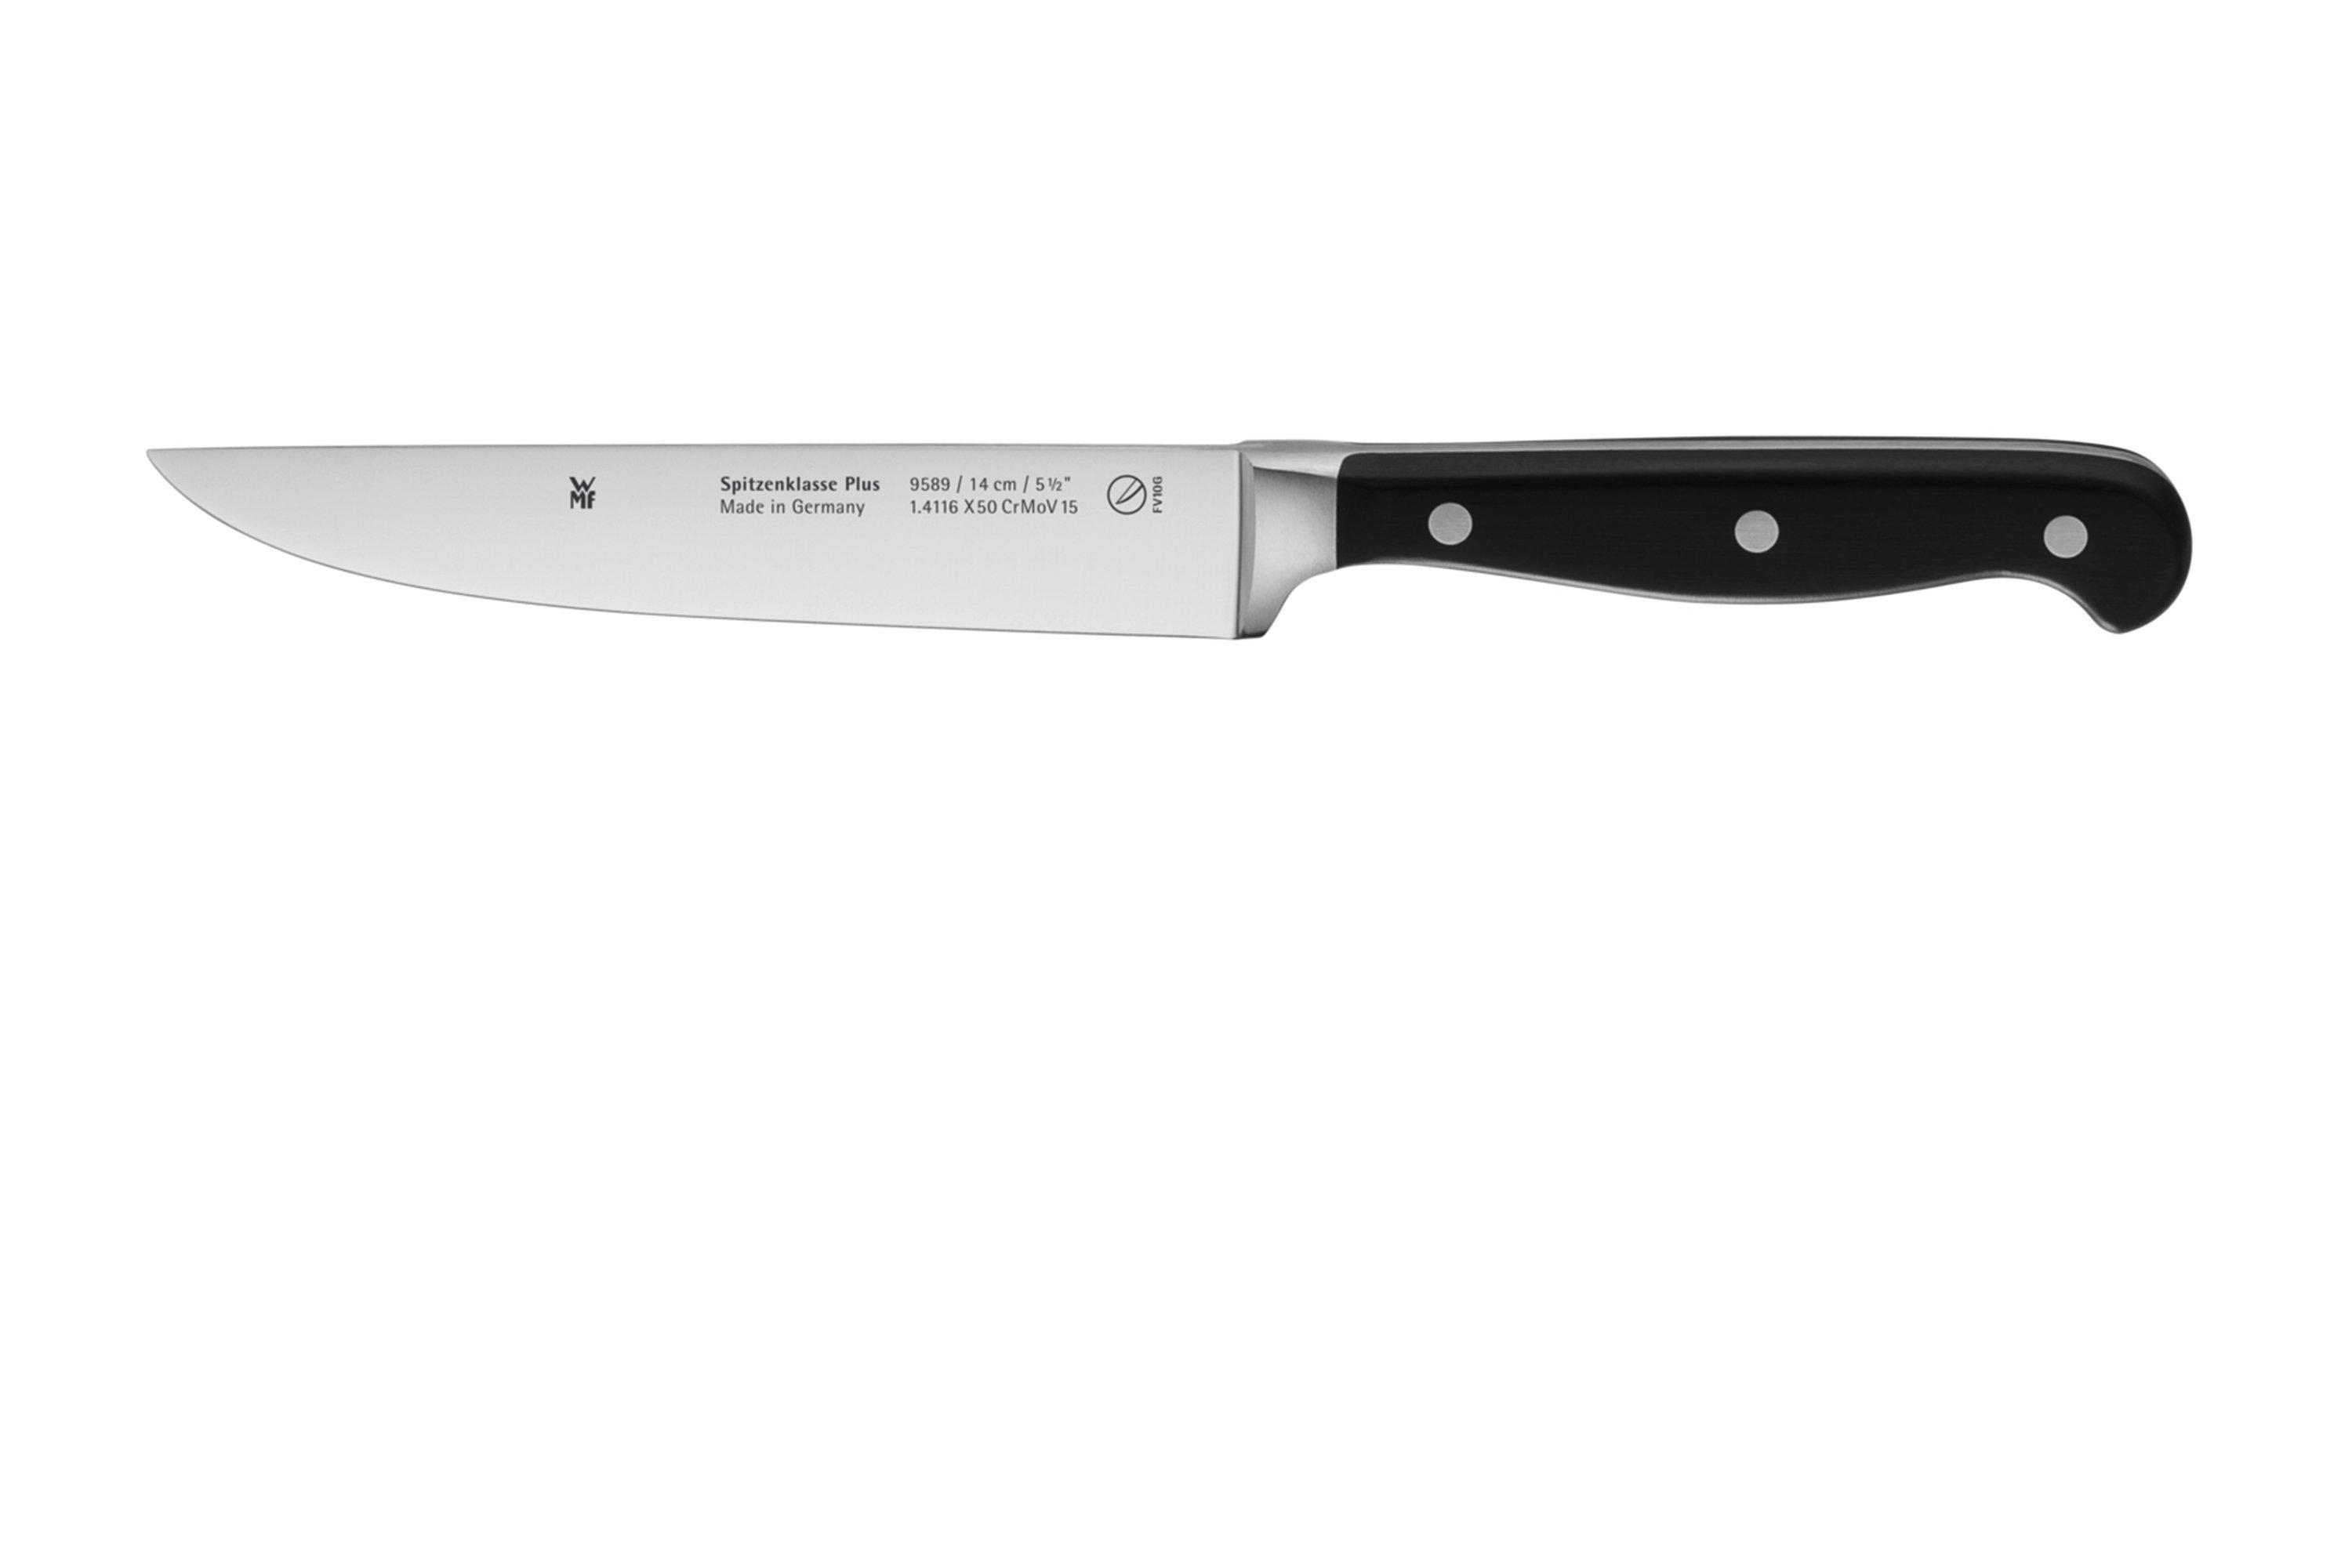 WMF Spitzenklasse Plus knife set 3-piece shopping Advantageously at 1894919992, 